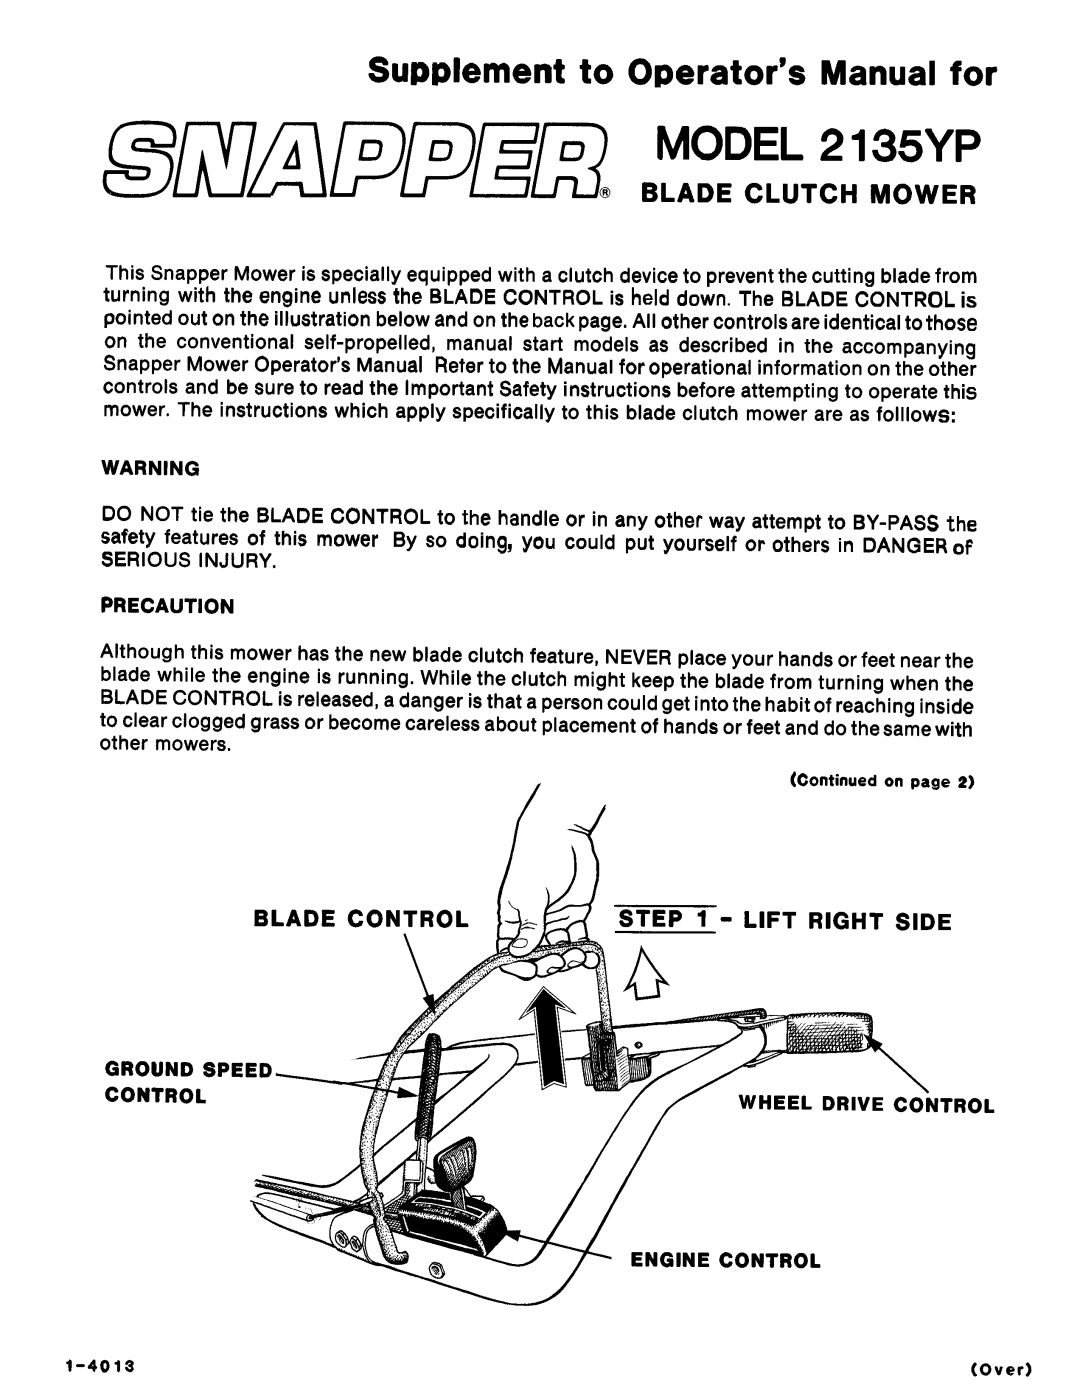 Snapper 2135YP manual 